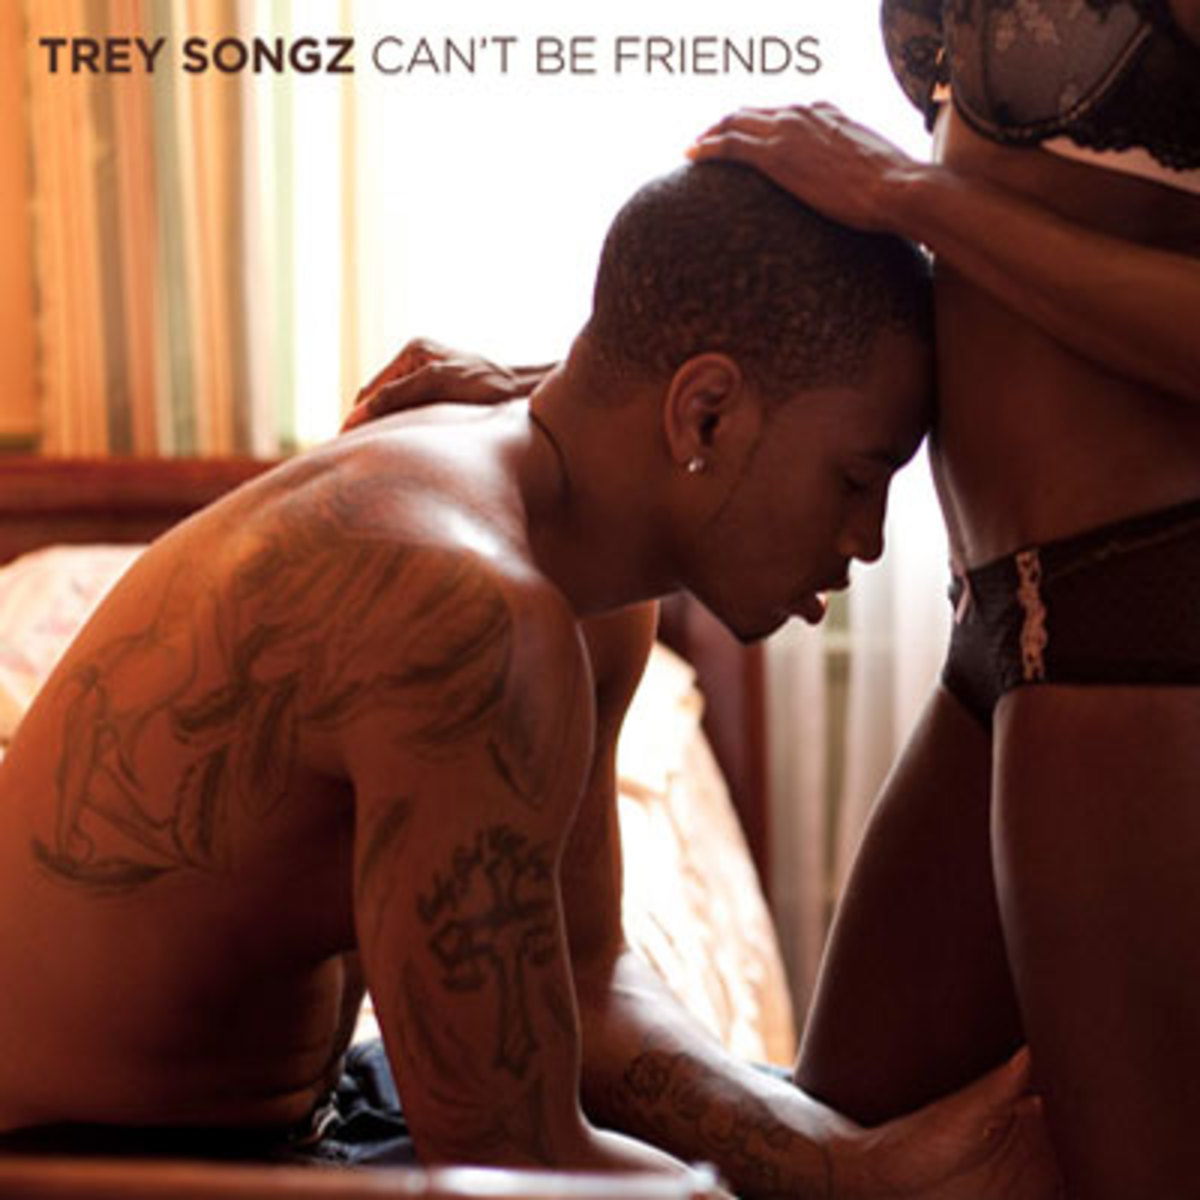 Trey songz best friend download free